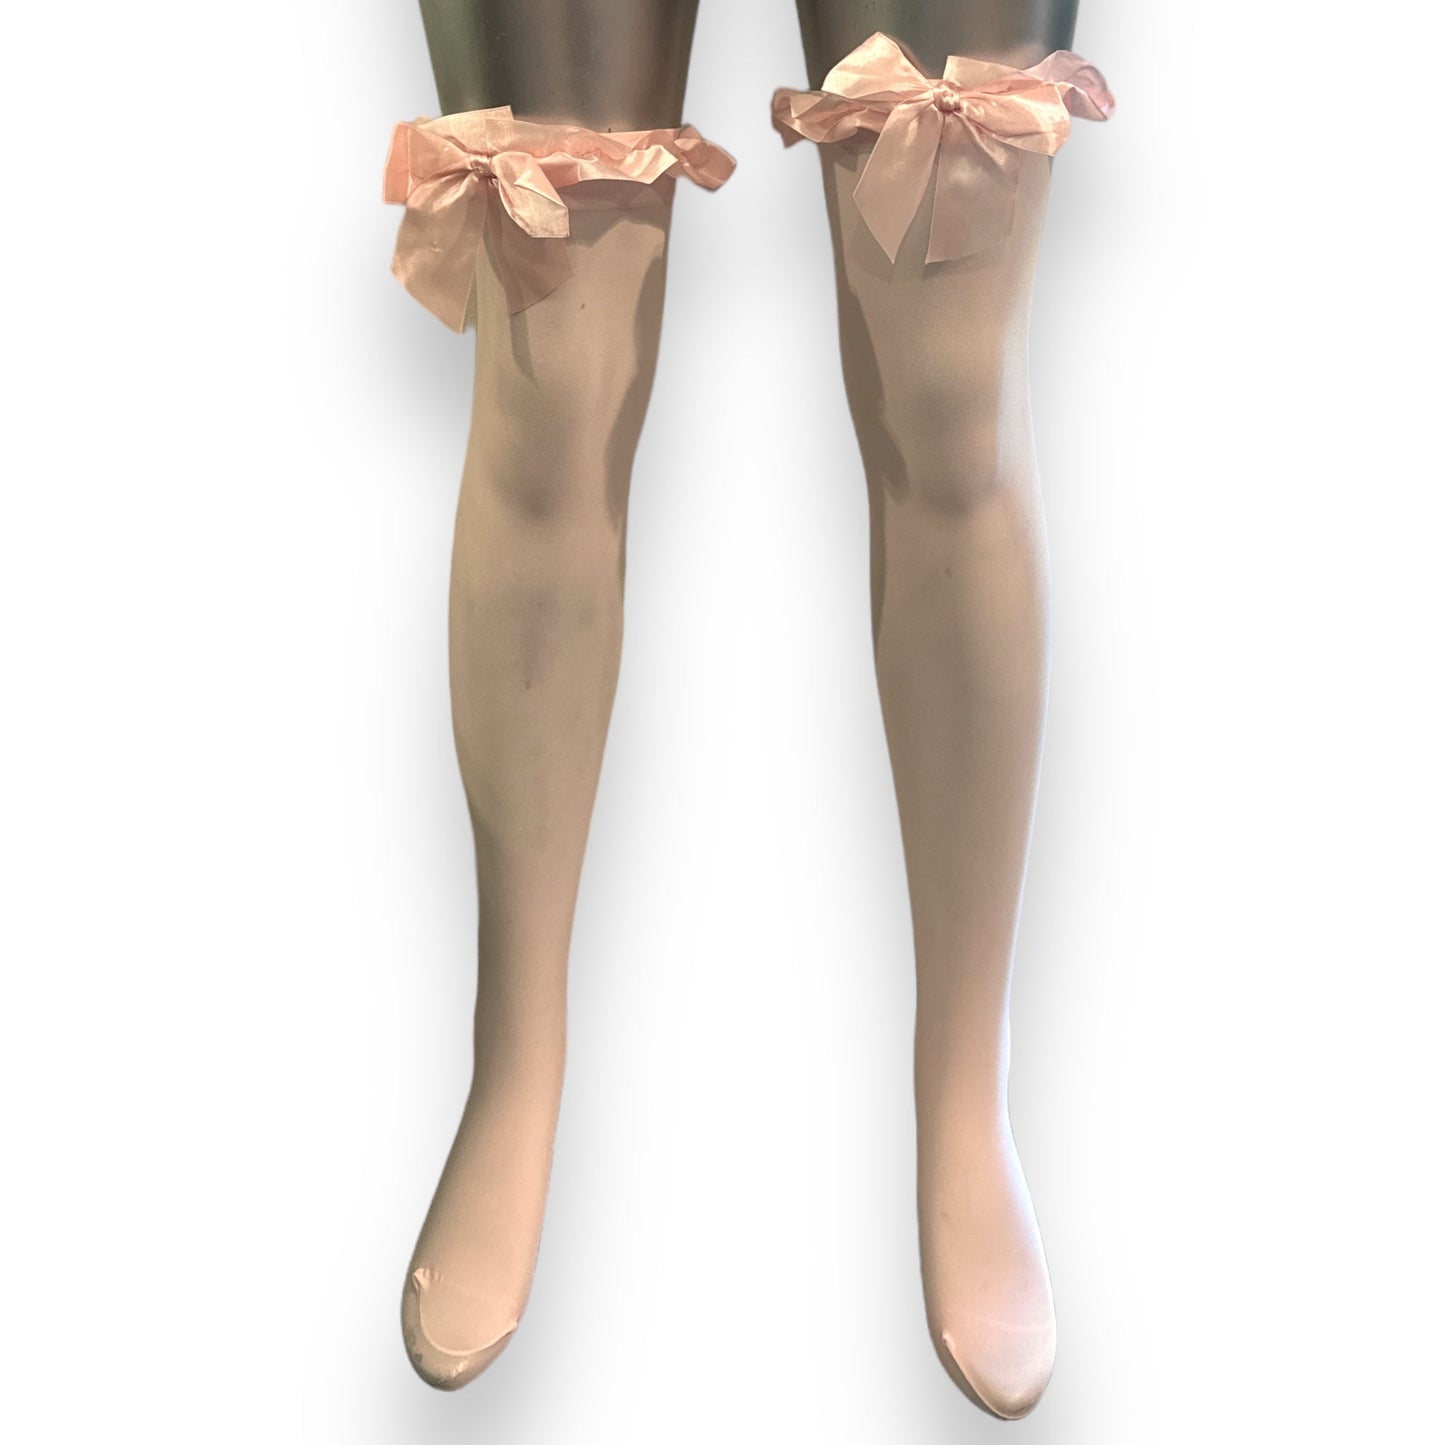 Lichtroze Stockings met Elegant Strikje - Verkrijgbaar in S/M en L/XL Maten